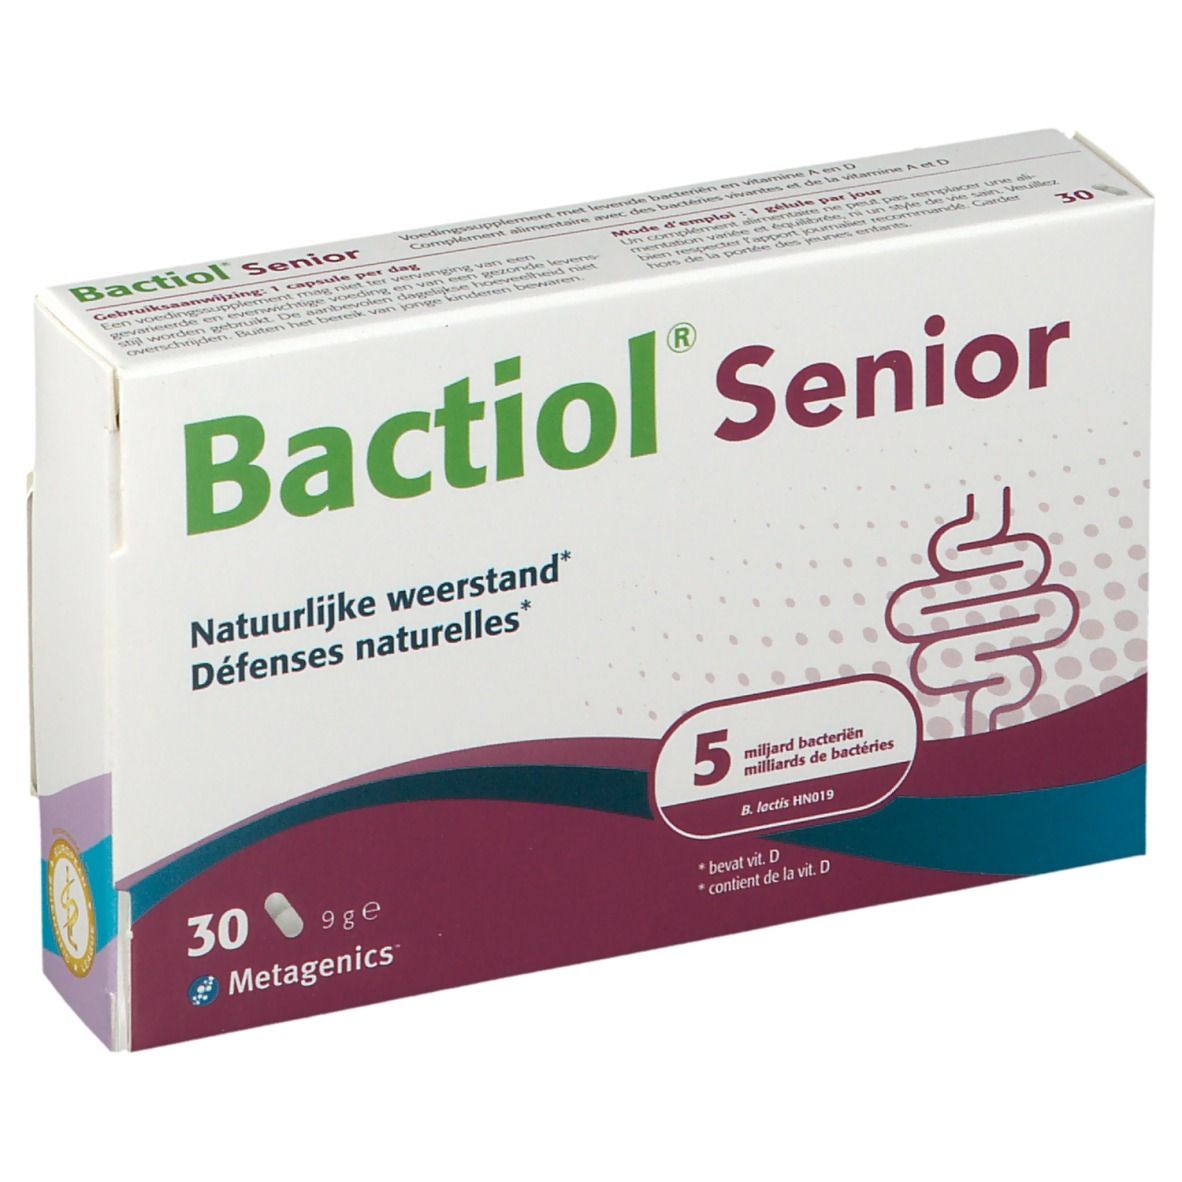 Bactiol® Senior